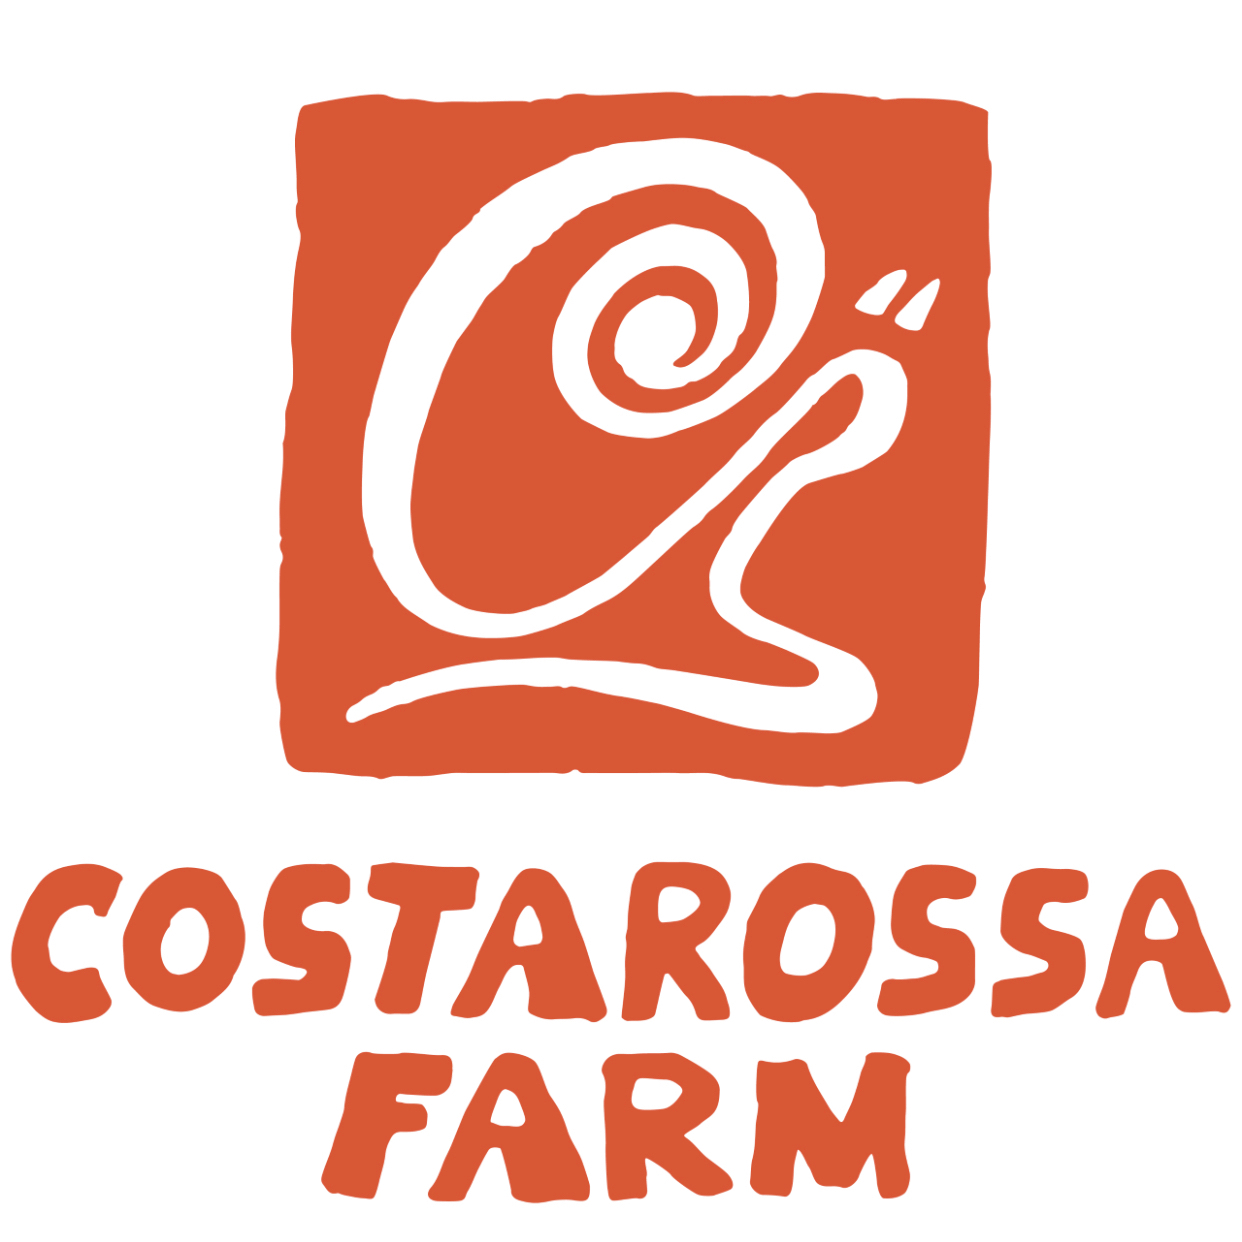 Costarossa Farm